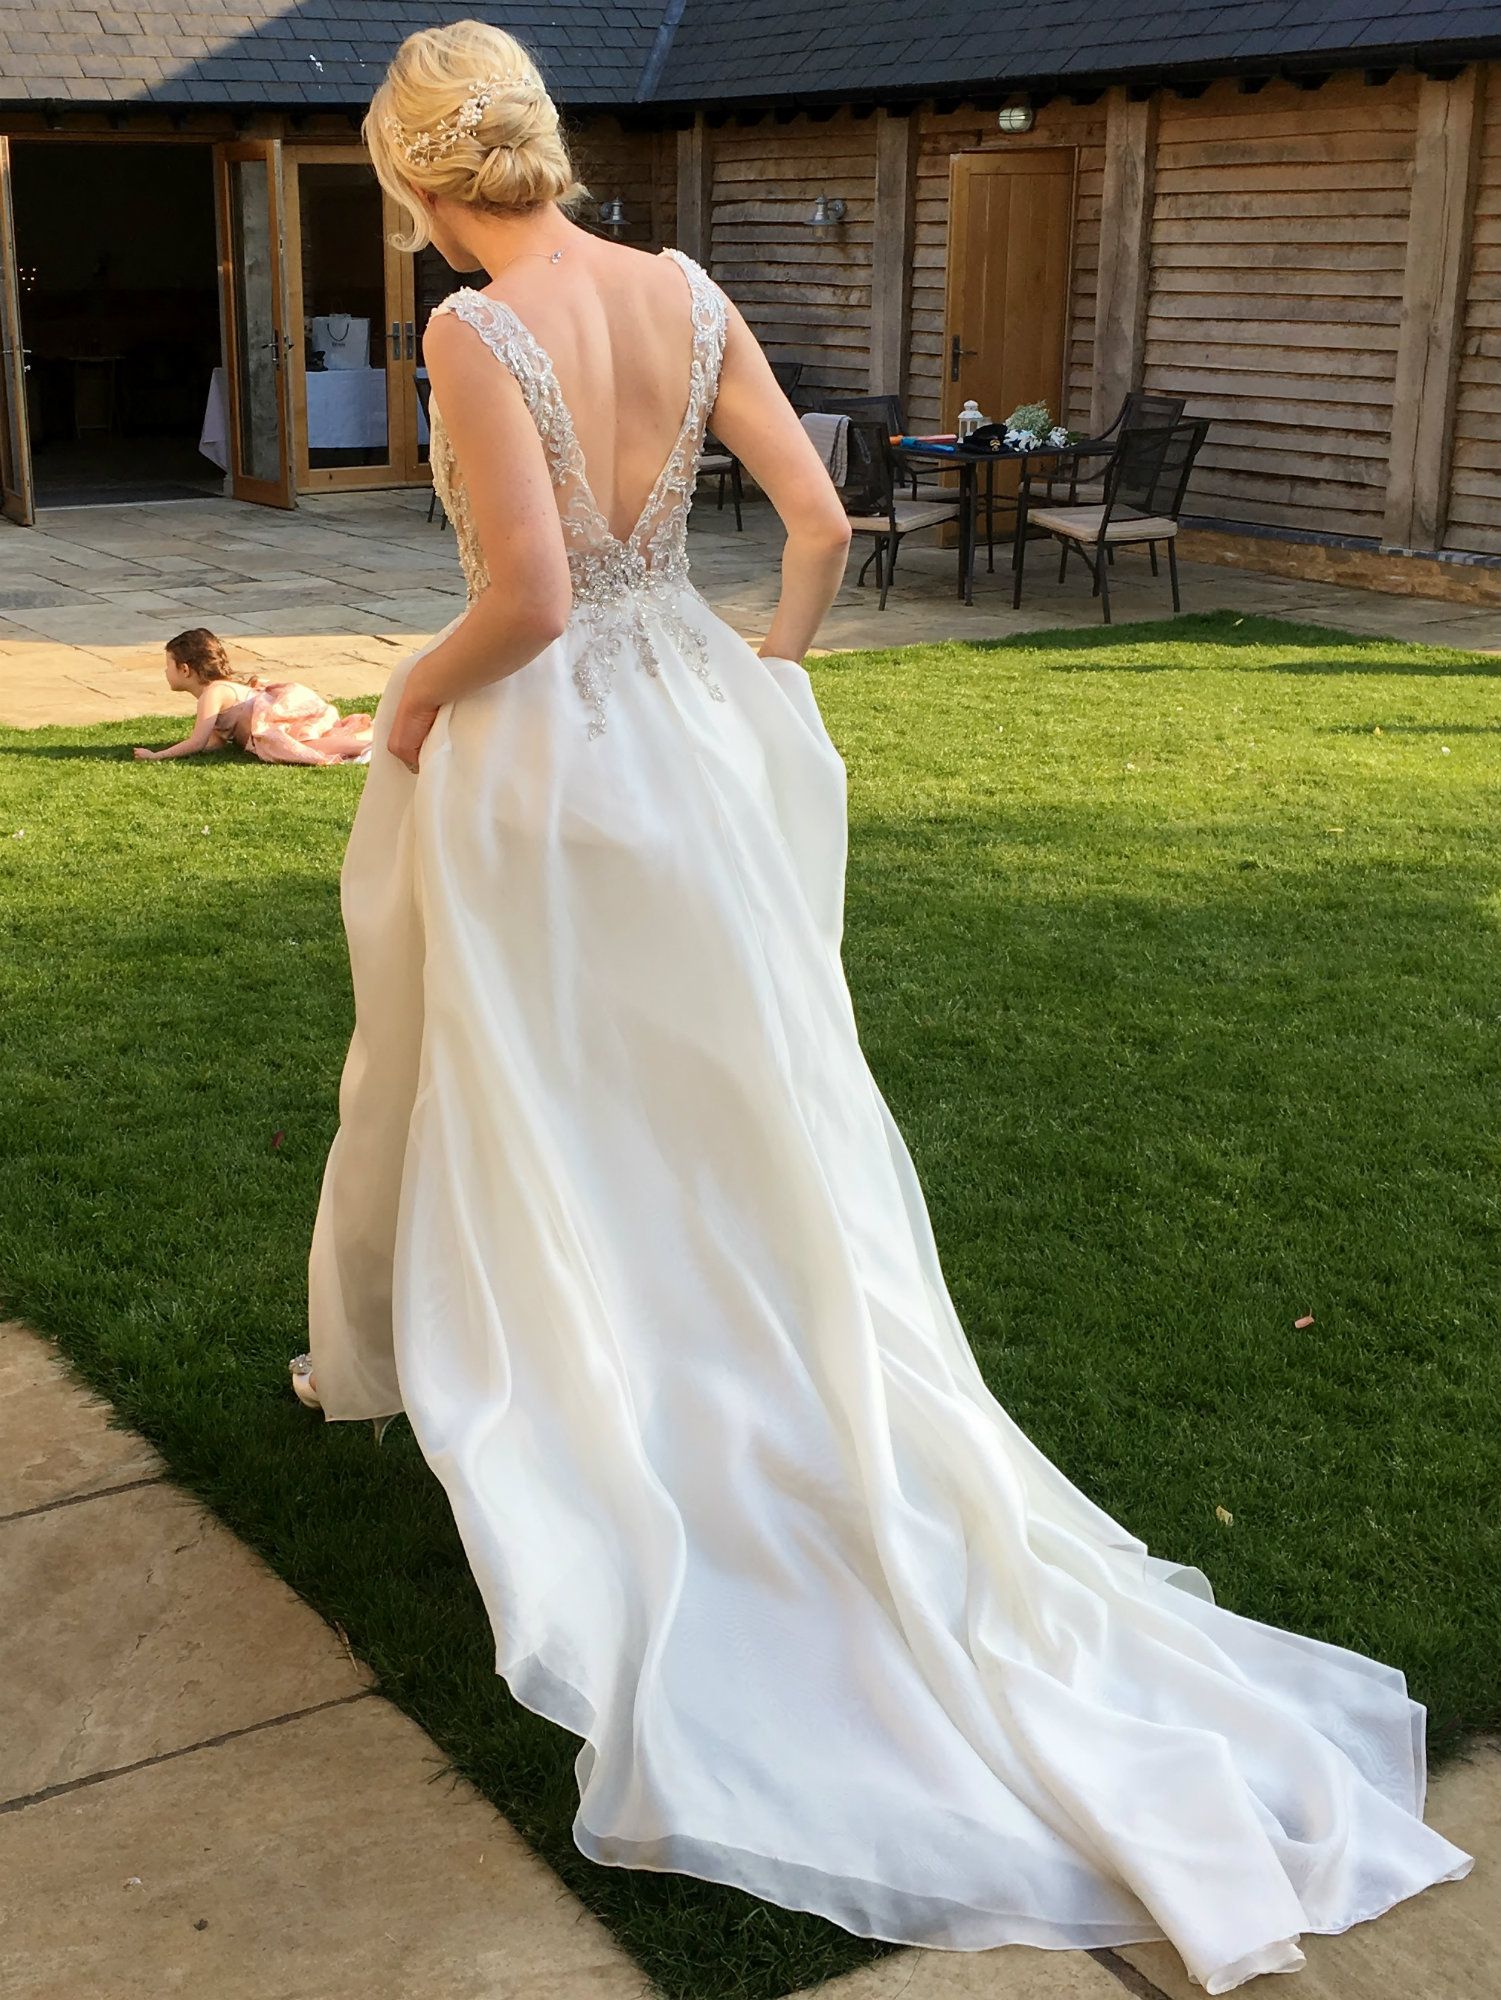 Snow-white-Bridal-hair-accessory-by-Beady Bride-Gloucestershire-Bridal-hair